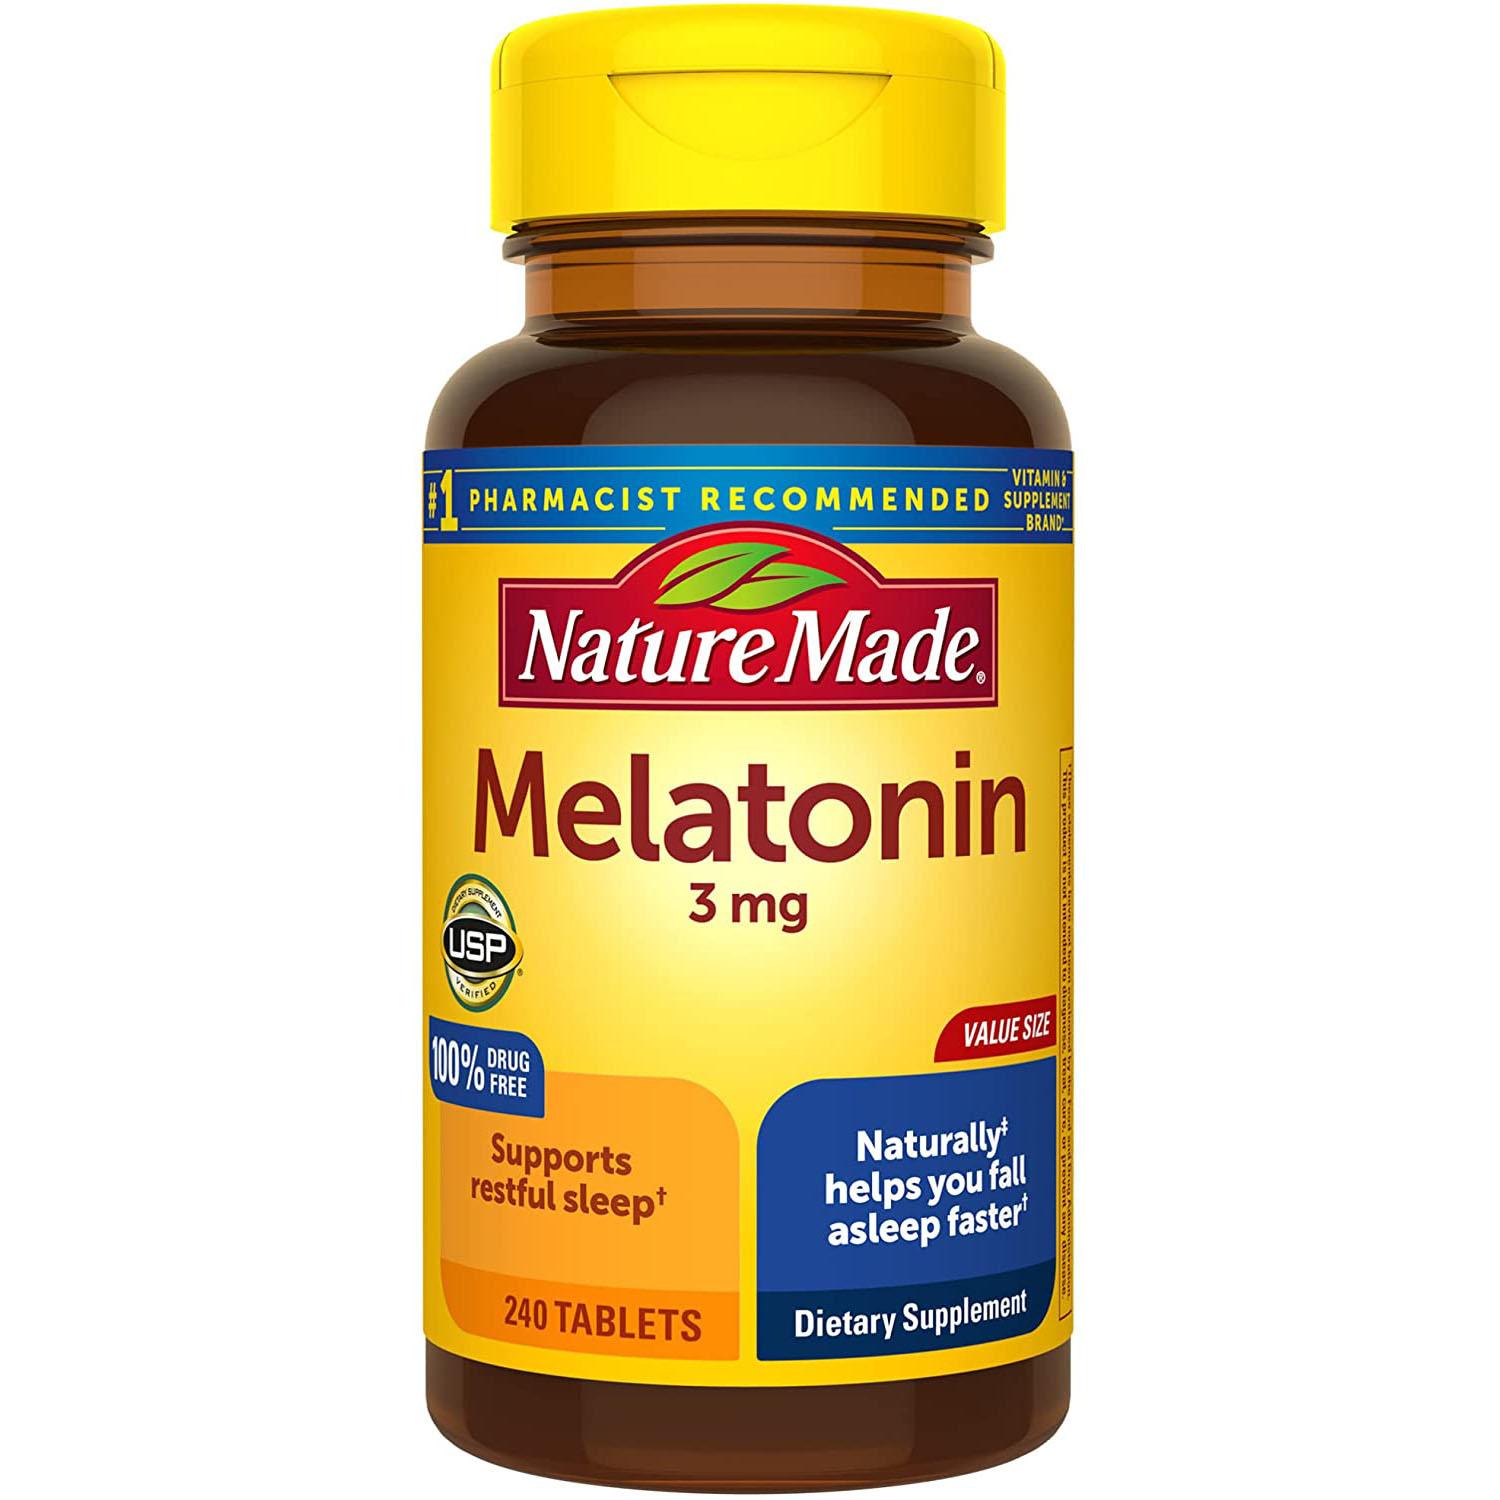 Nature Made Melatonin Sleep Aid Supplement for $5.12 Shipped